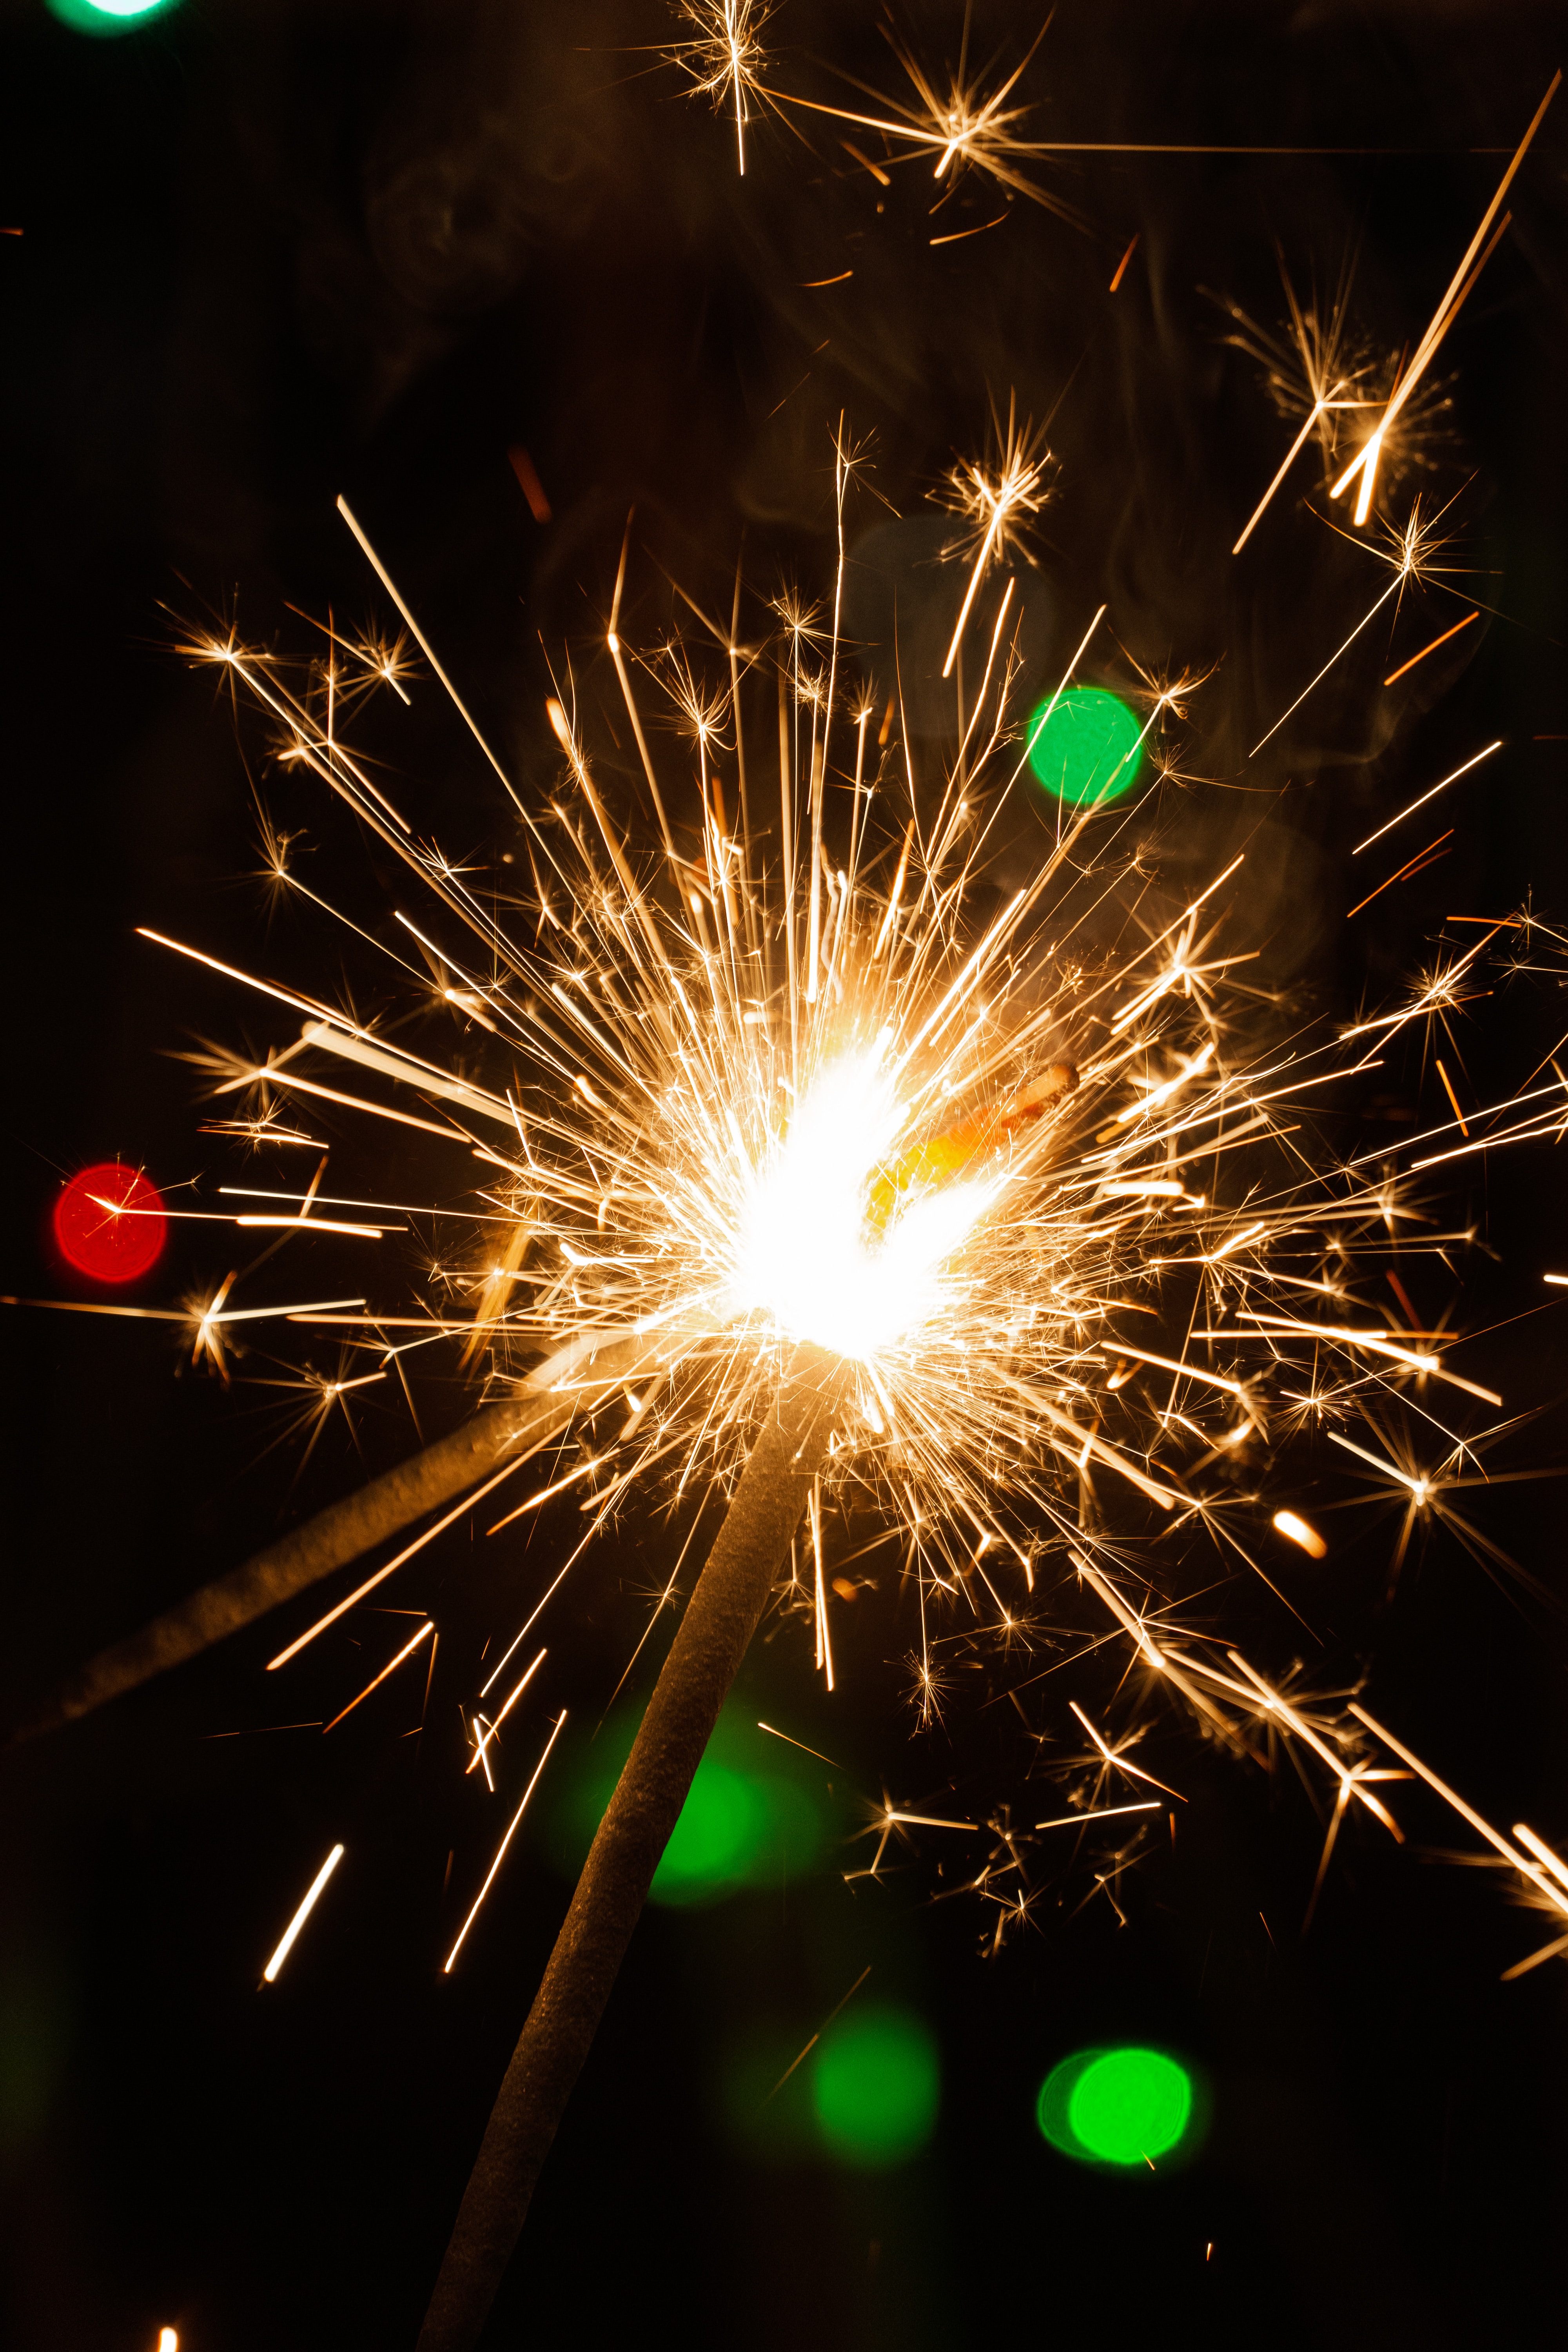 holidays, bengal lights, glare, sparks, holiday, sparklers